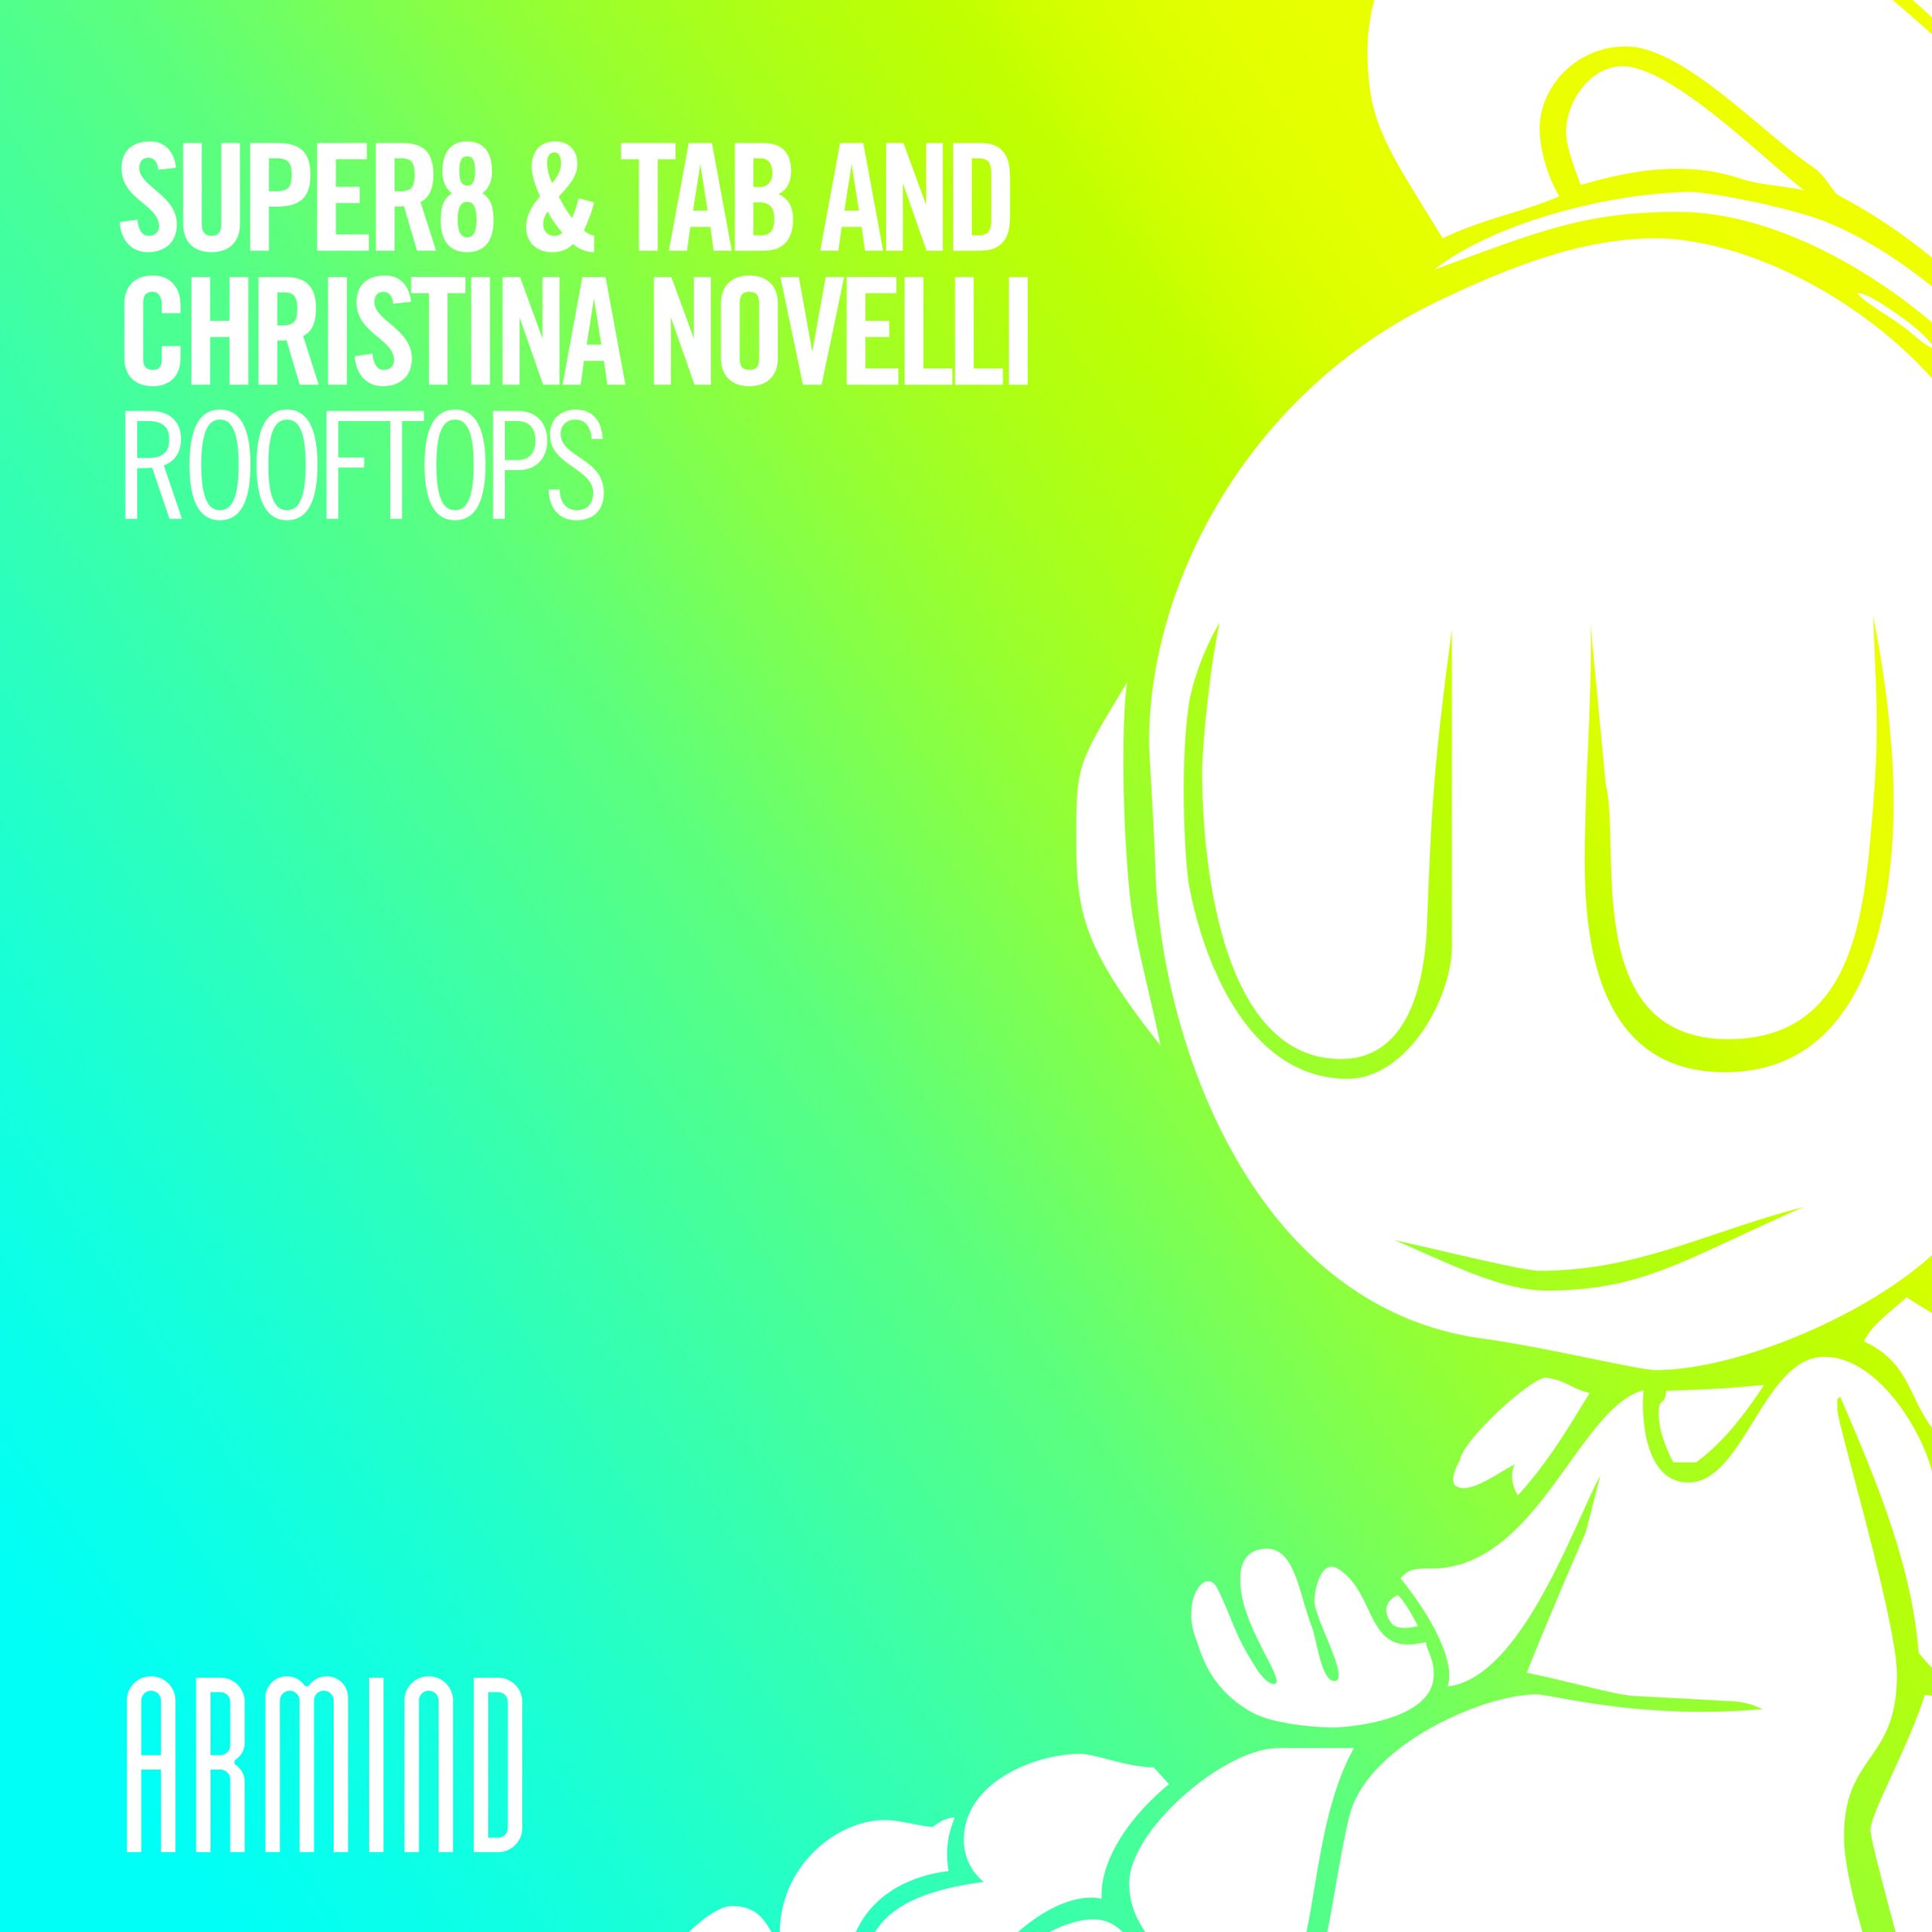 Super8 & Tab Christina Novelli Rooftops